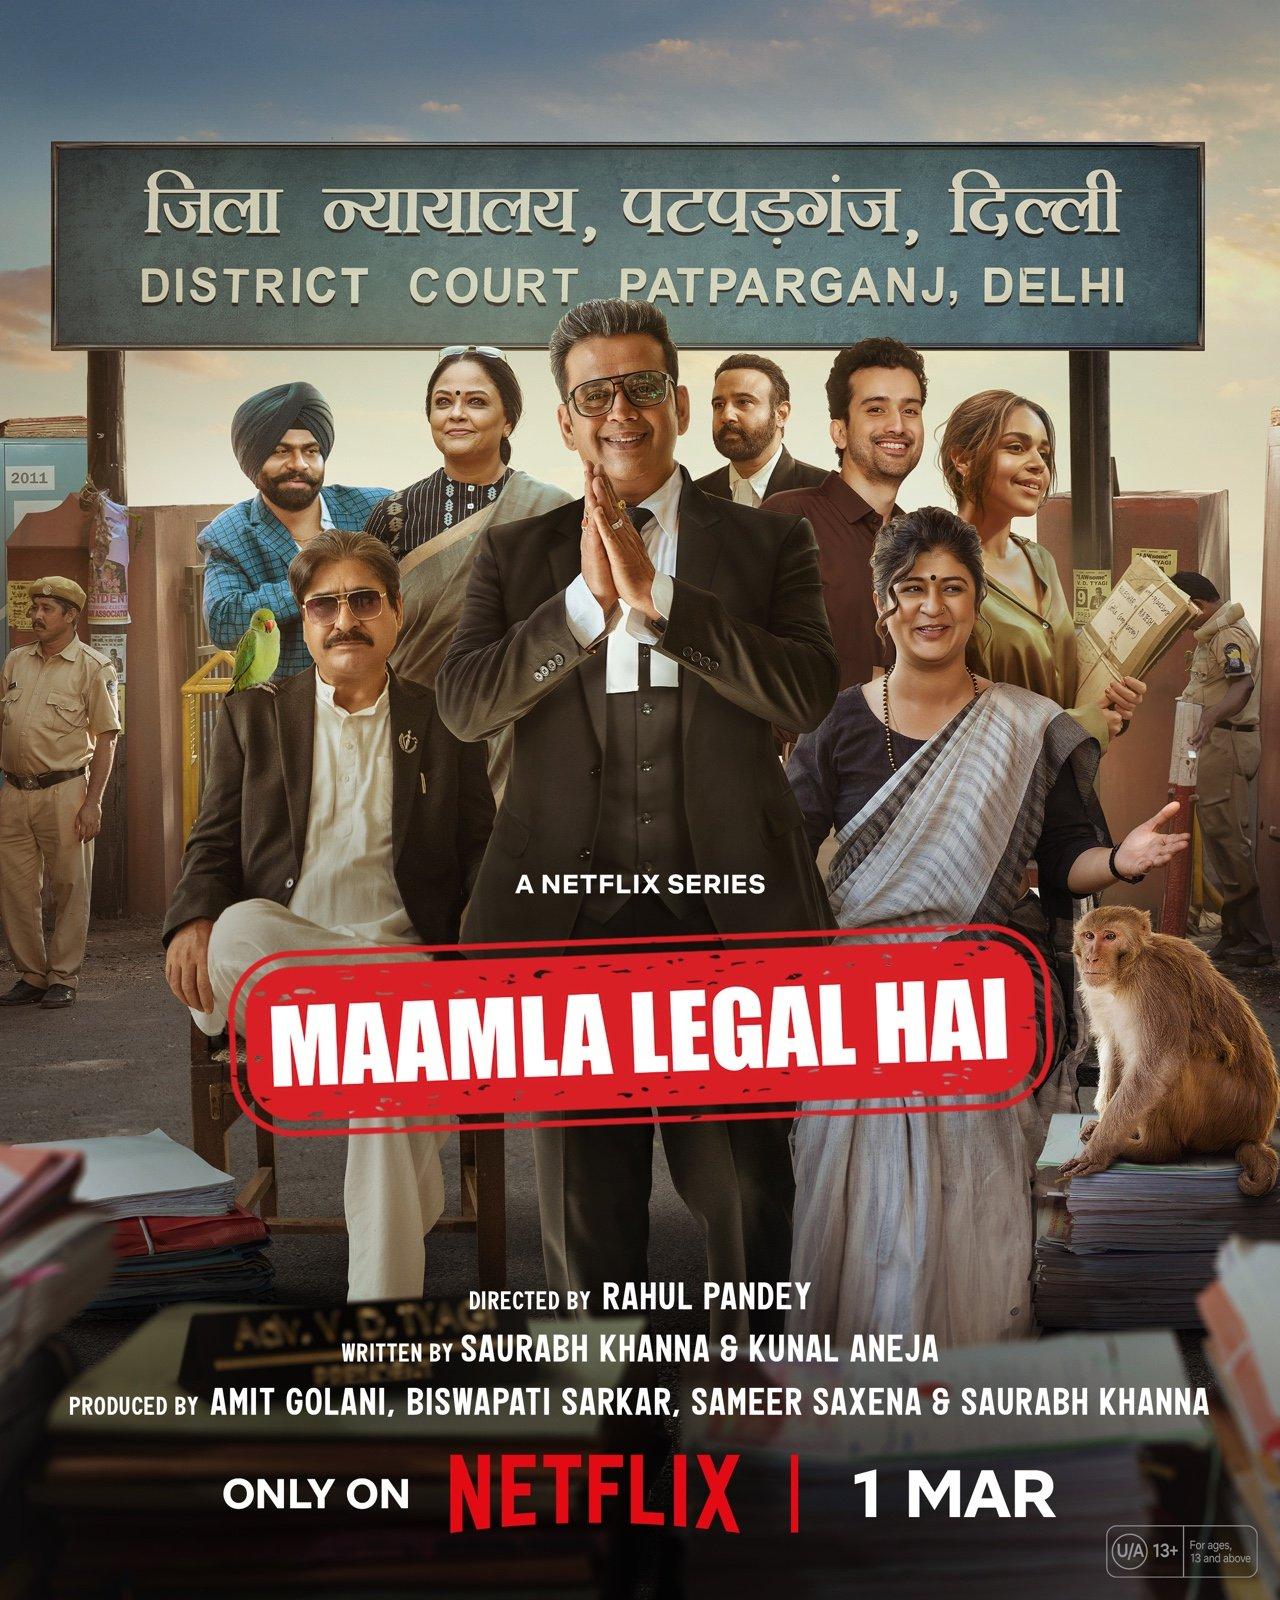 Maamla Legal Hai (March 1) - Streaming on Netflix